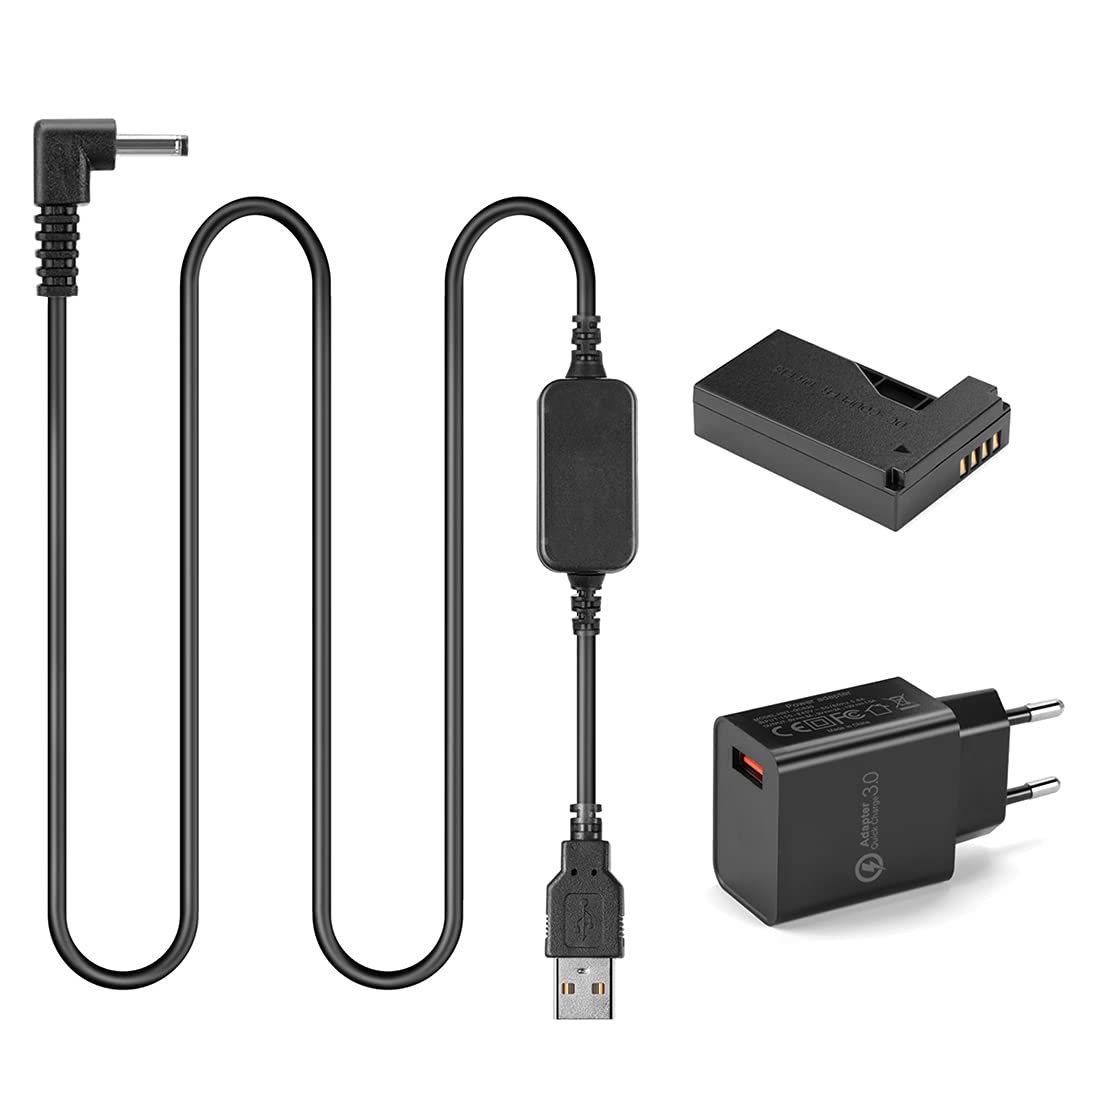 5V-8.4V USB-Laufwerk Kabel ACK-E15 Mobiles Netzteil + DR-E15 Dummy Batterie DC-Koppler Grip + QC3.0 Adapter Kit für CanonEOS 100D kiss X7 Rebel SL1